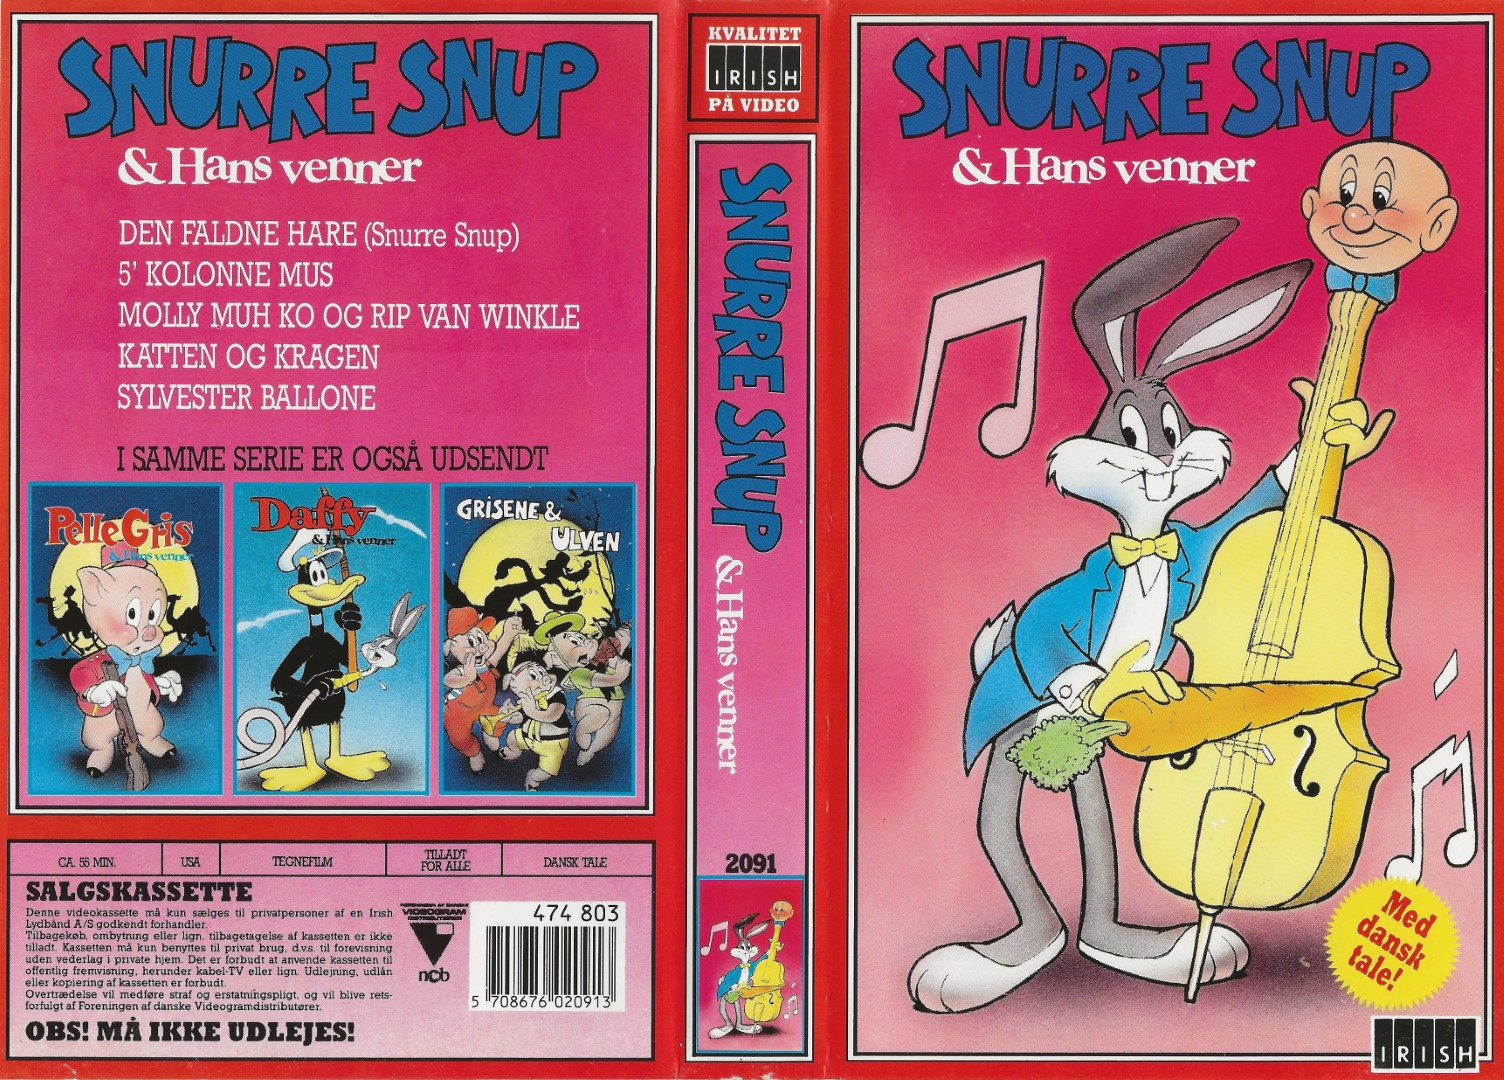 Snurre Snup & hans venner  VHS Irish 0